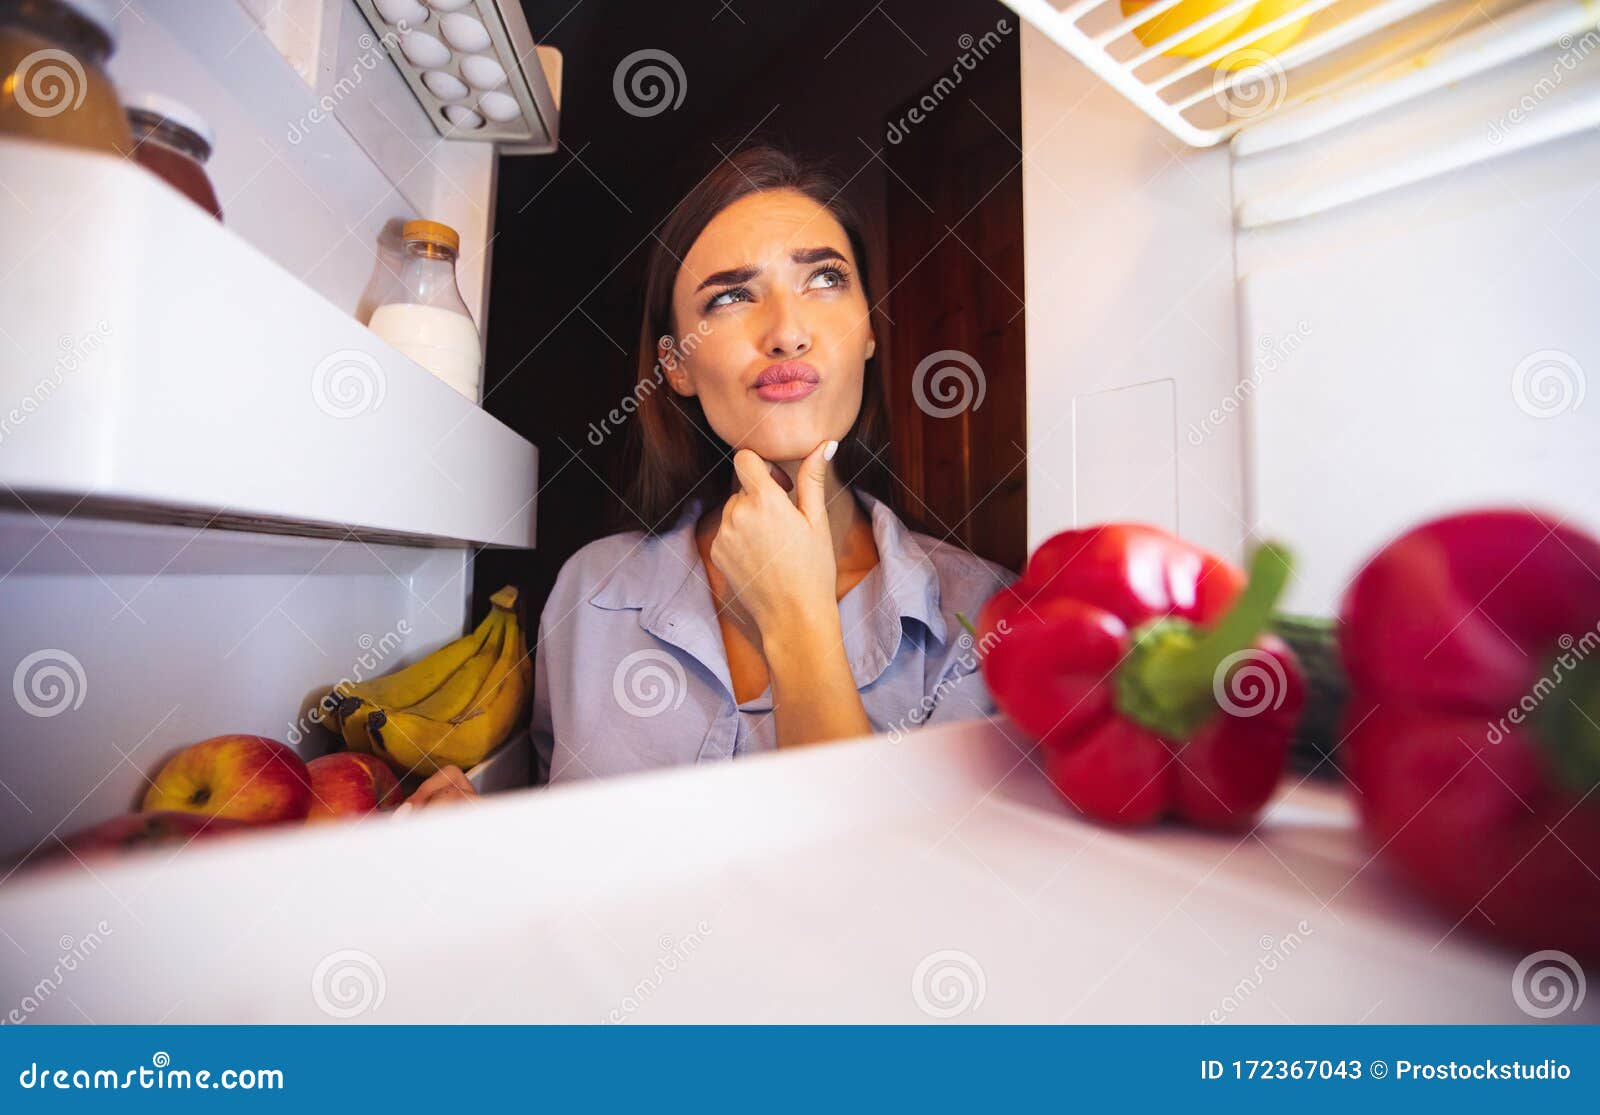 young pensive woman thinking near opened fridge